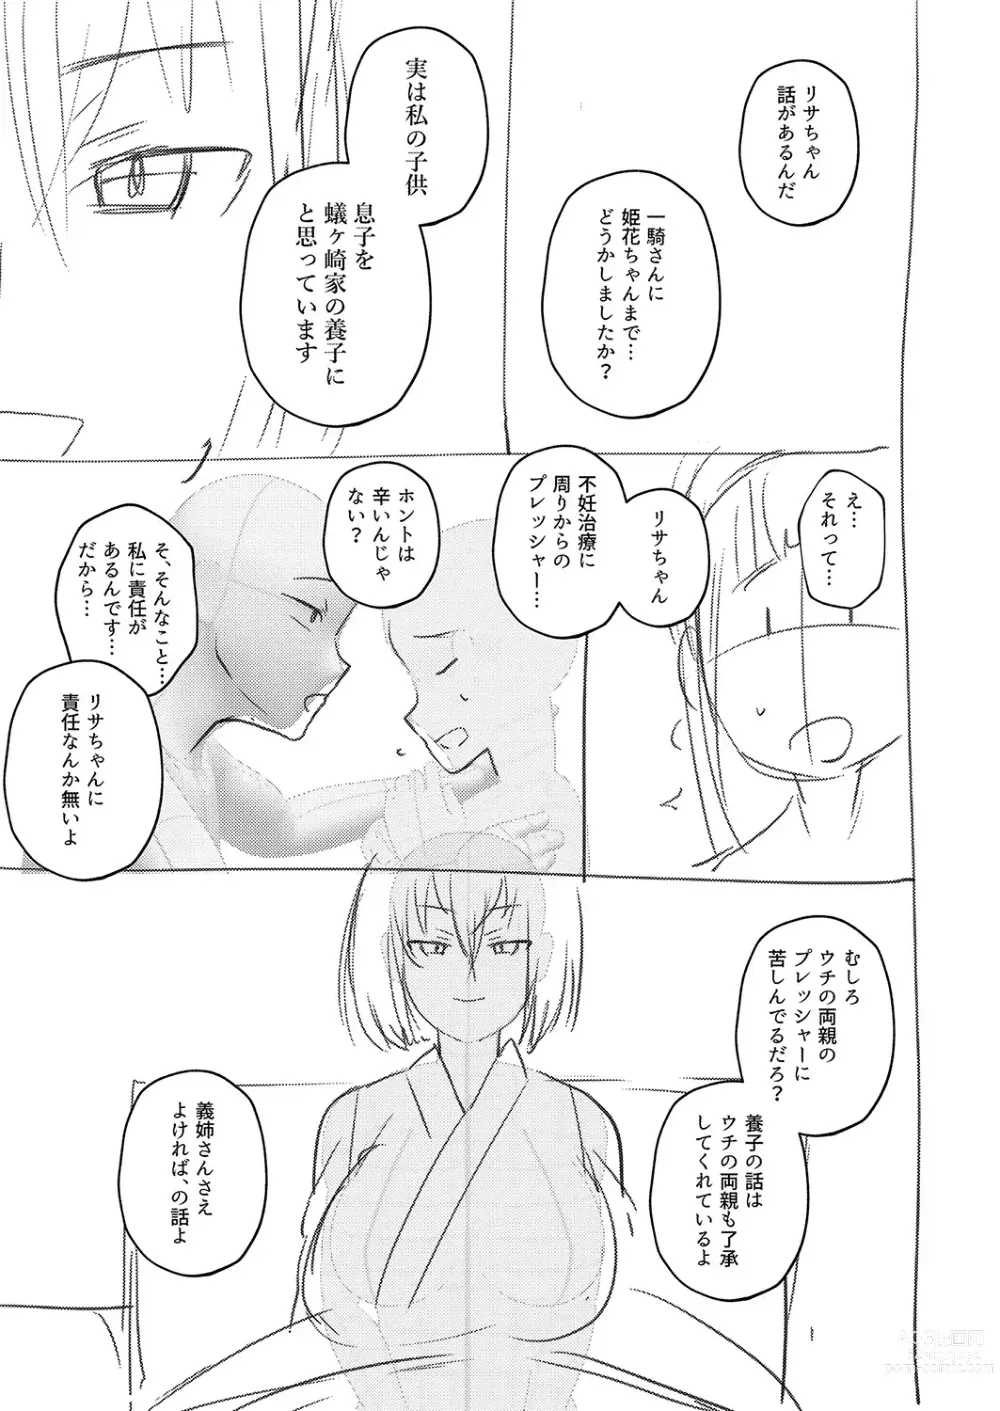 Page 228 of manga Daijoubu. Jitsumai no Kouryakubon da yo. FANZA Tokusouban